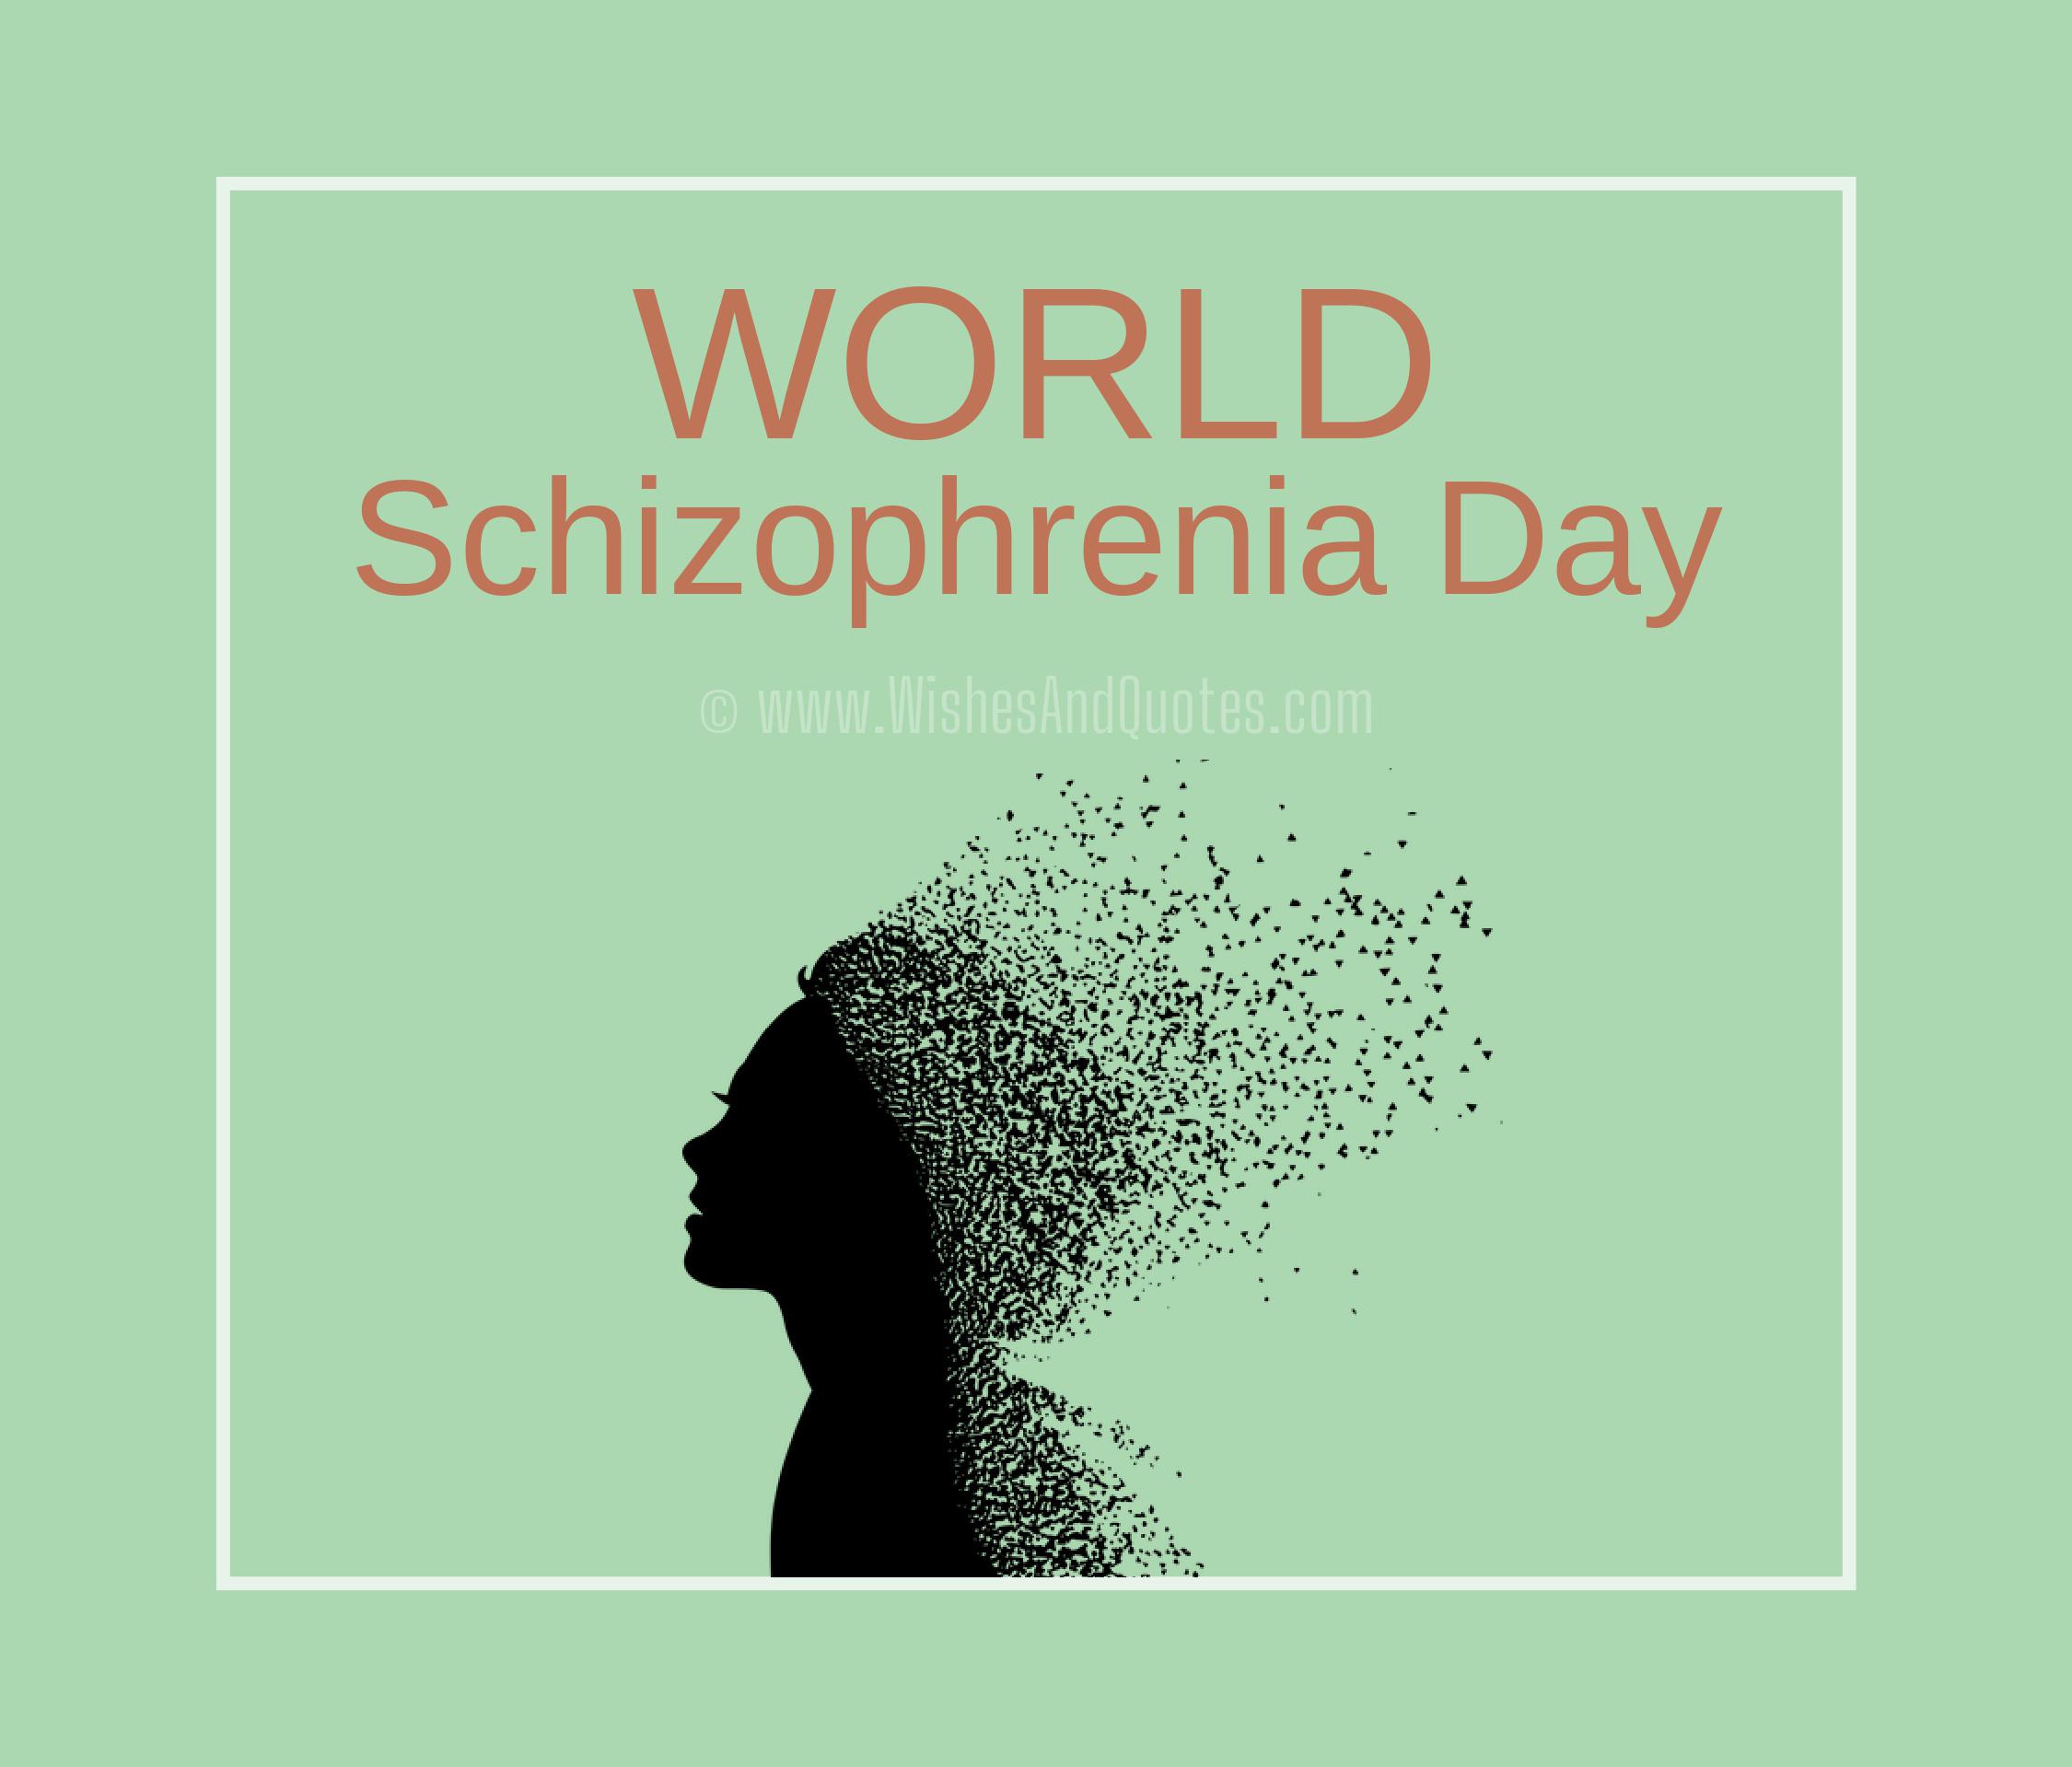 Schizophrenia Day